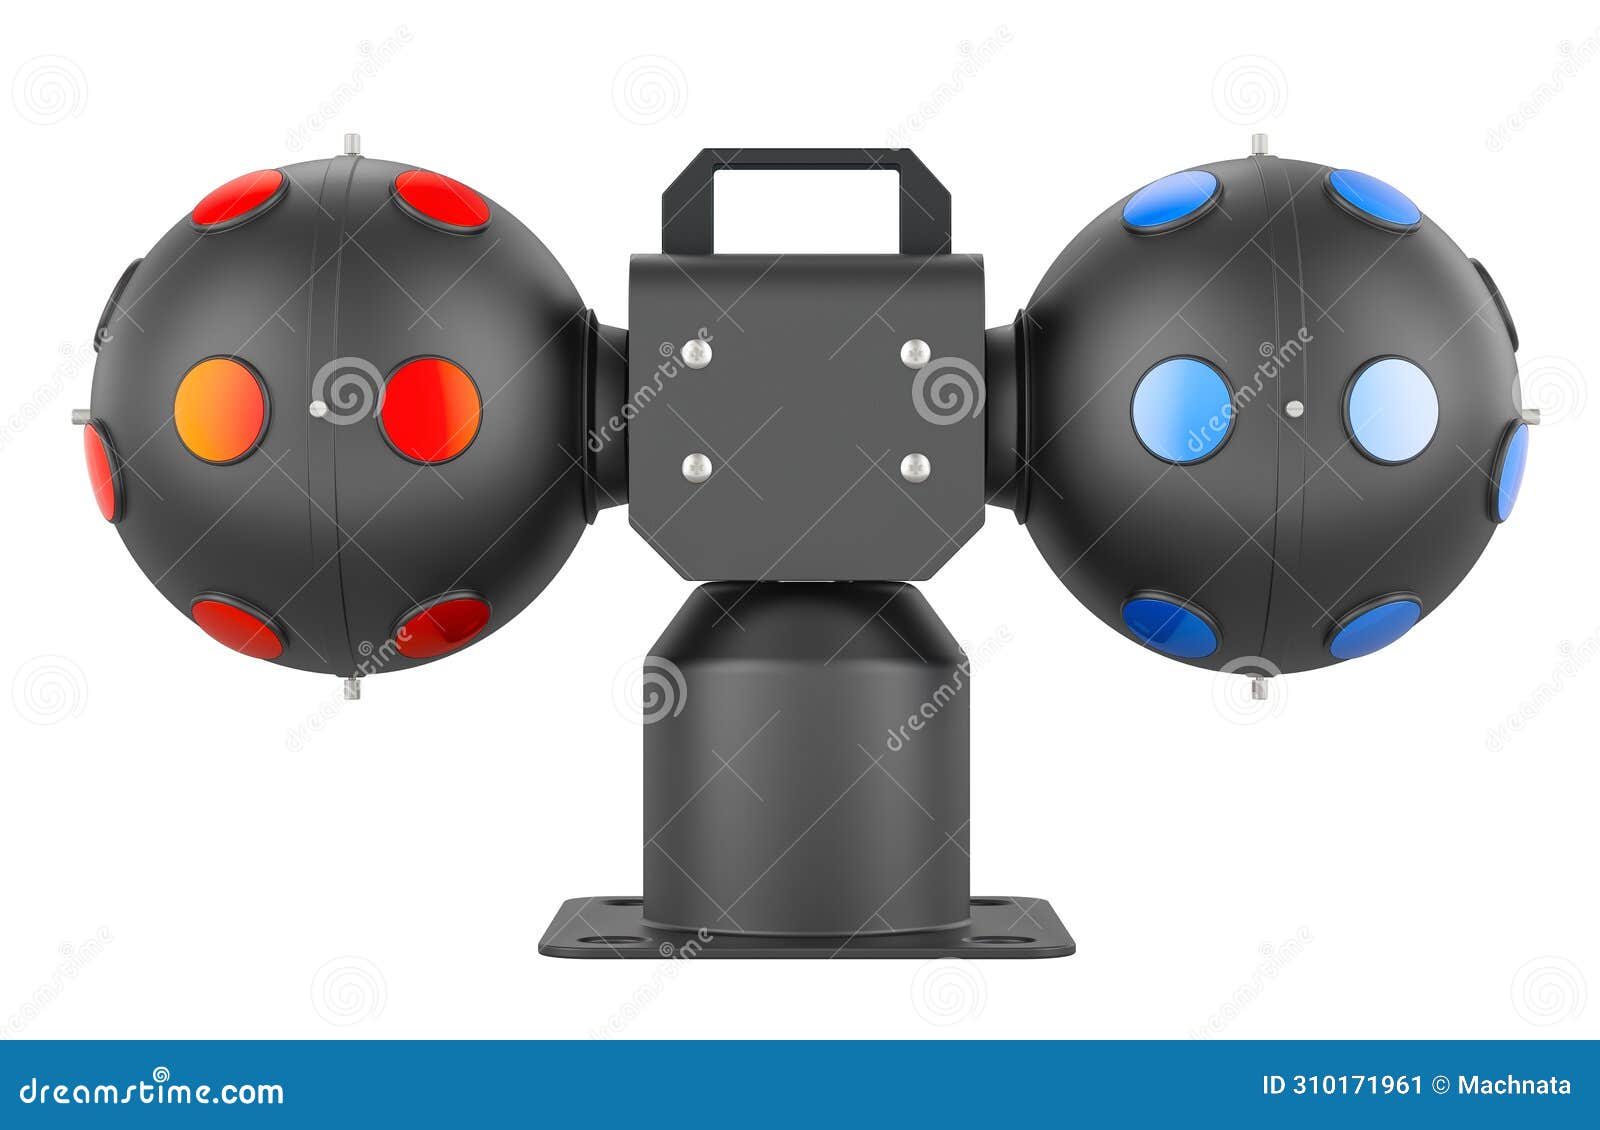 disco roto balls. variable-speed dual rotating ball light, 3d rendering